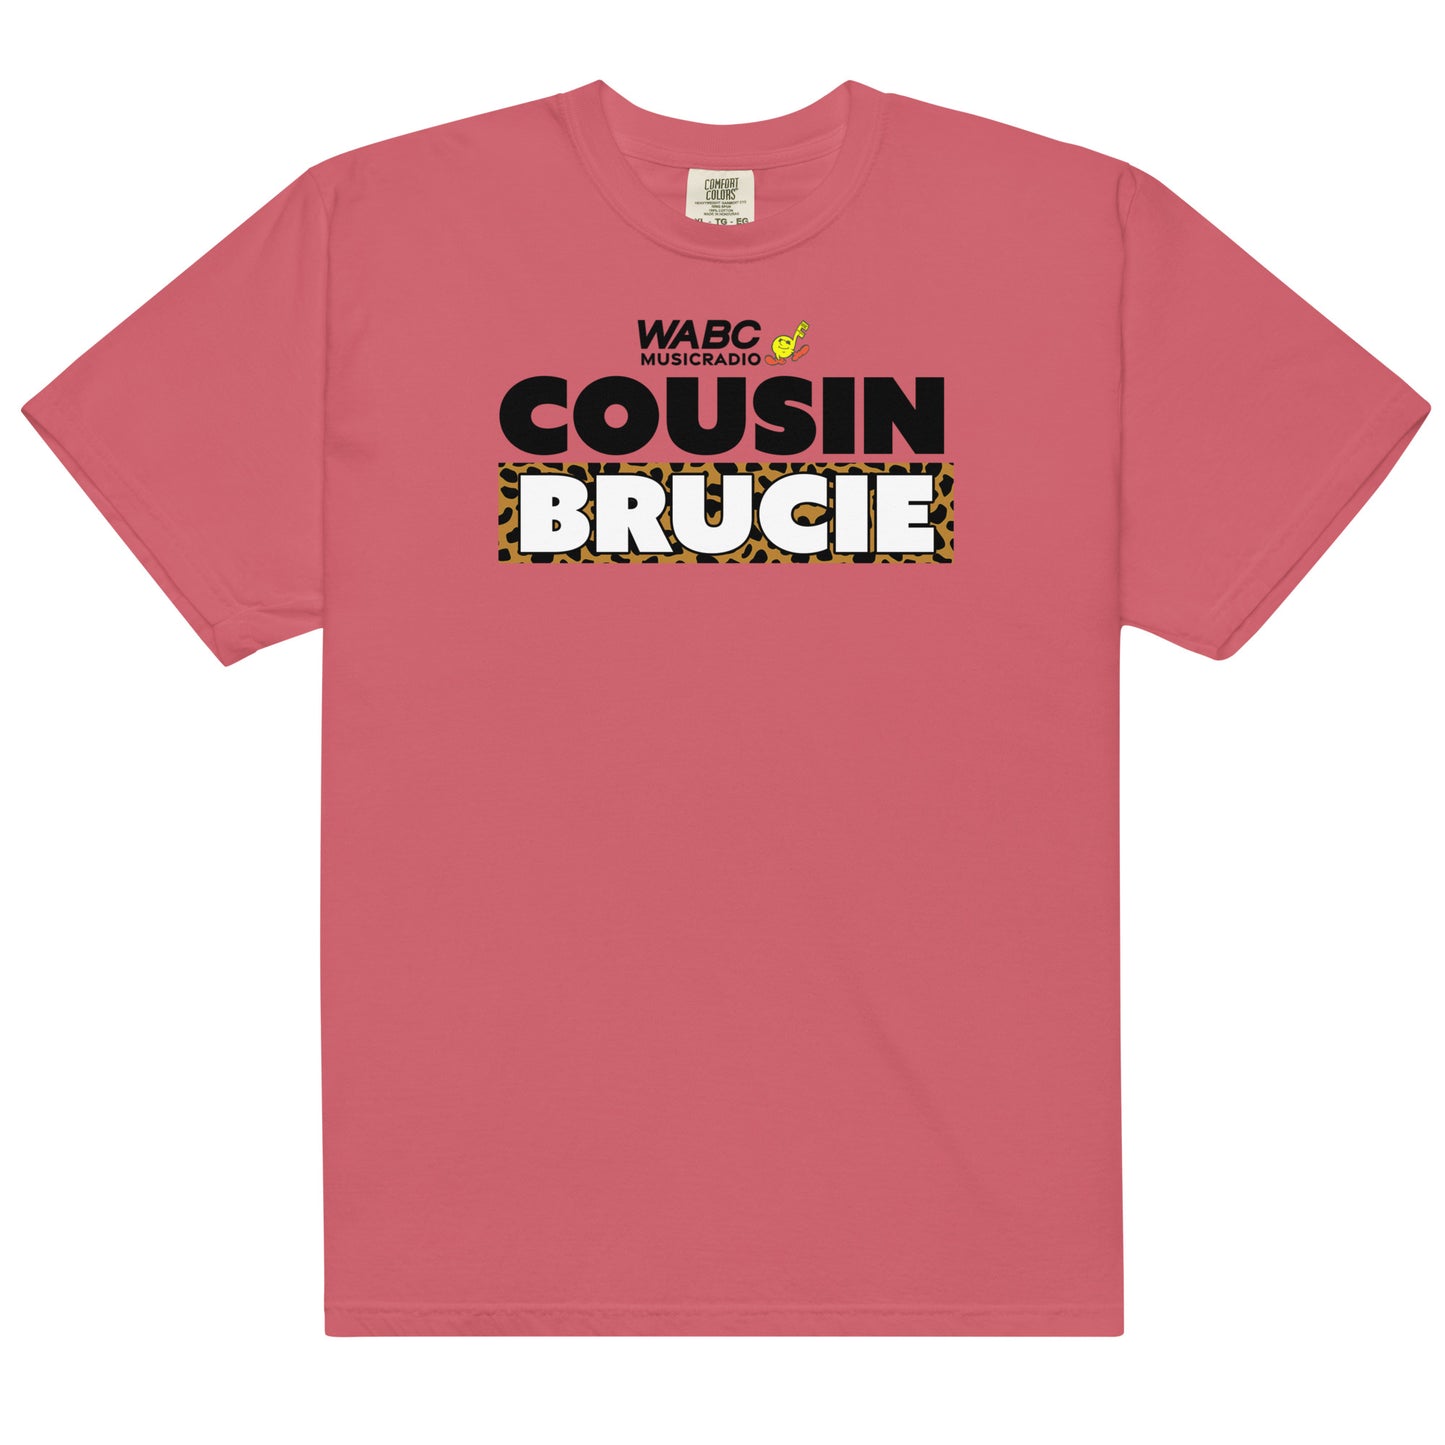 Cousin Brucie WABC Music Radio T-Shirt - Dark Logo